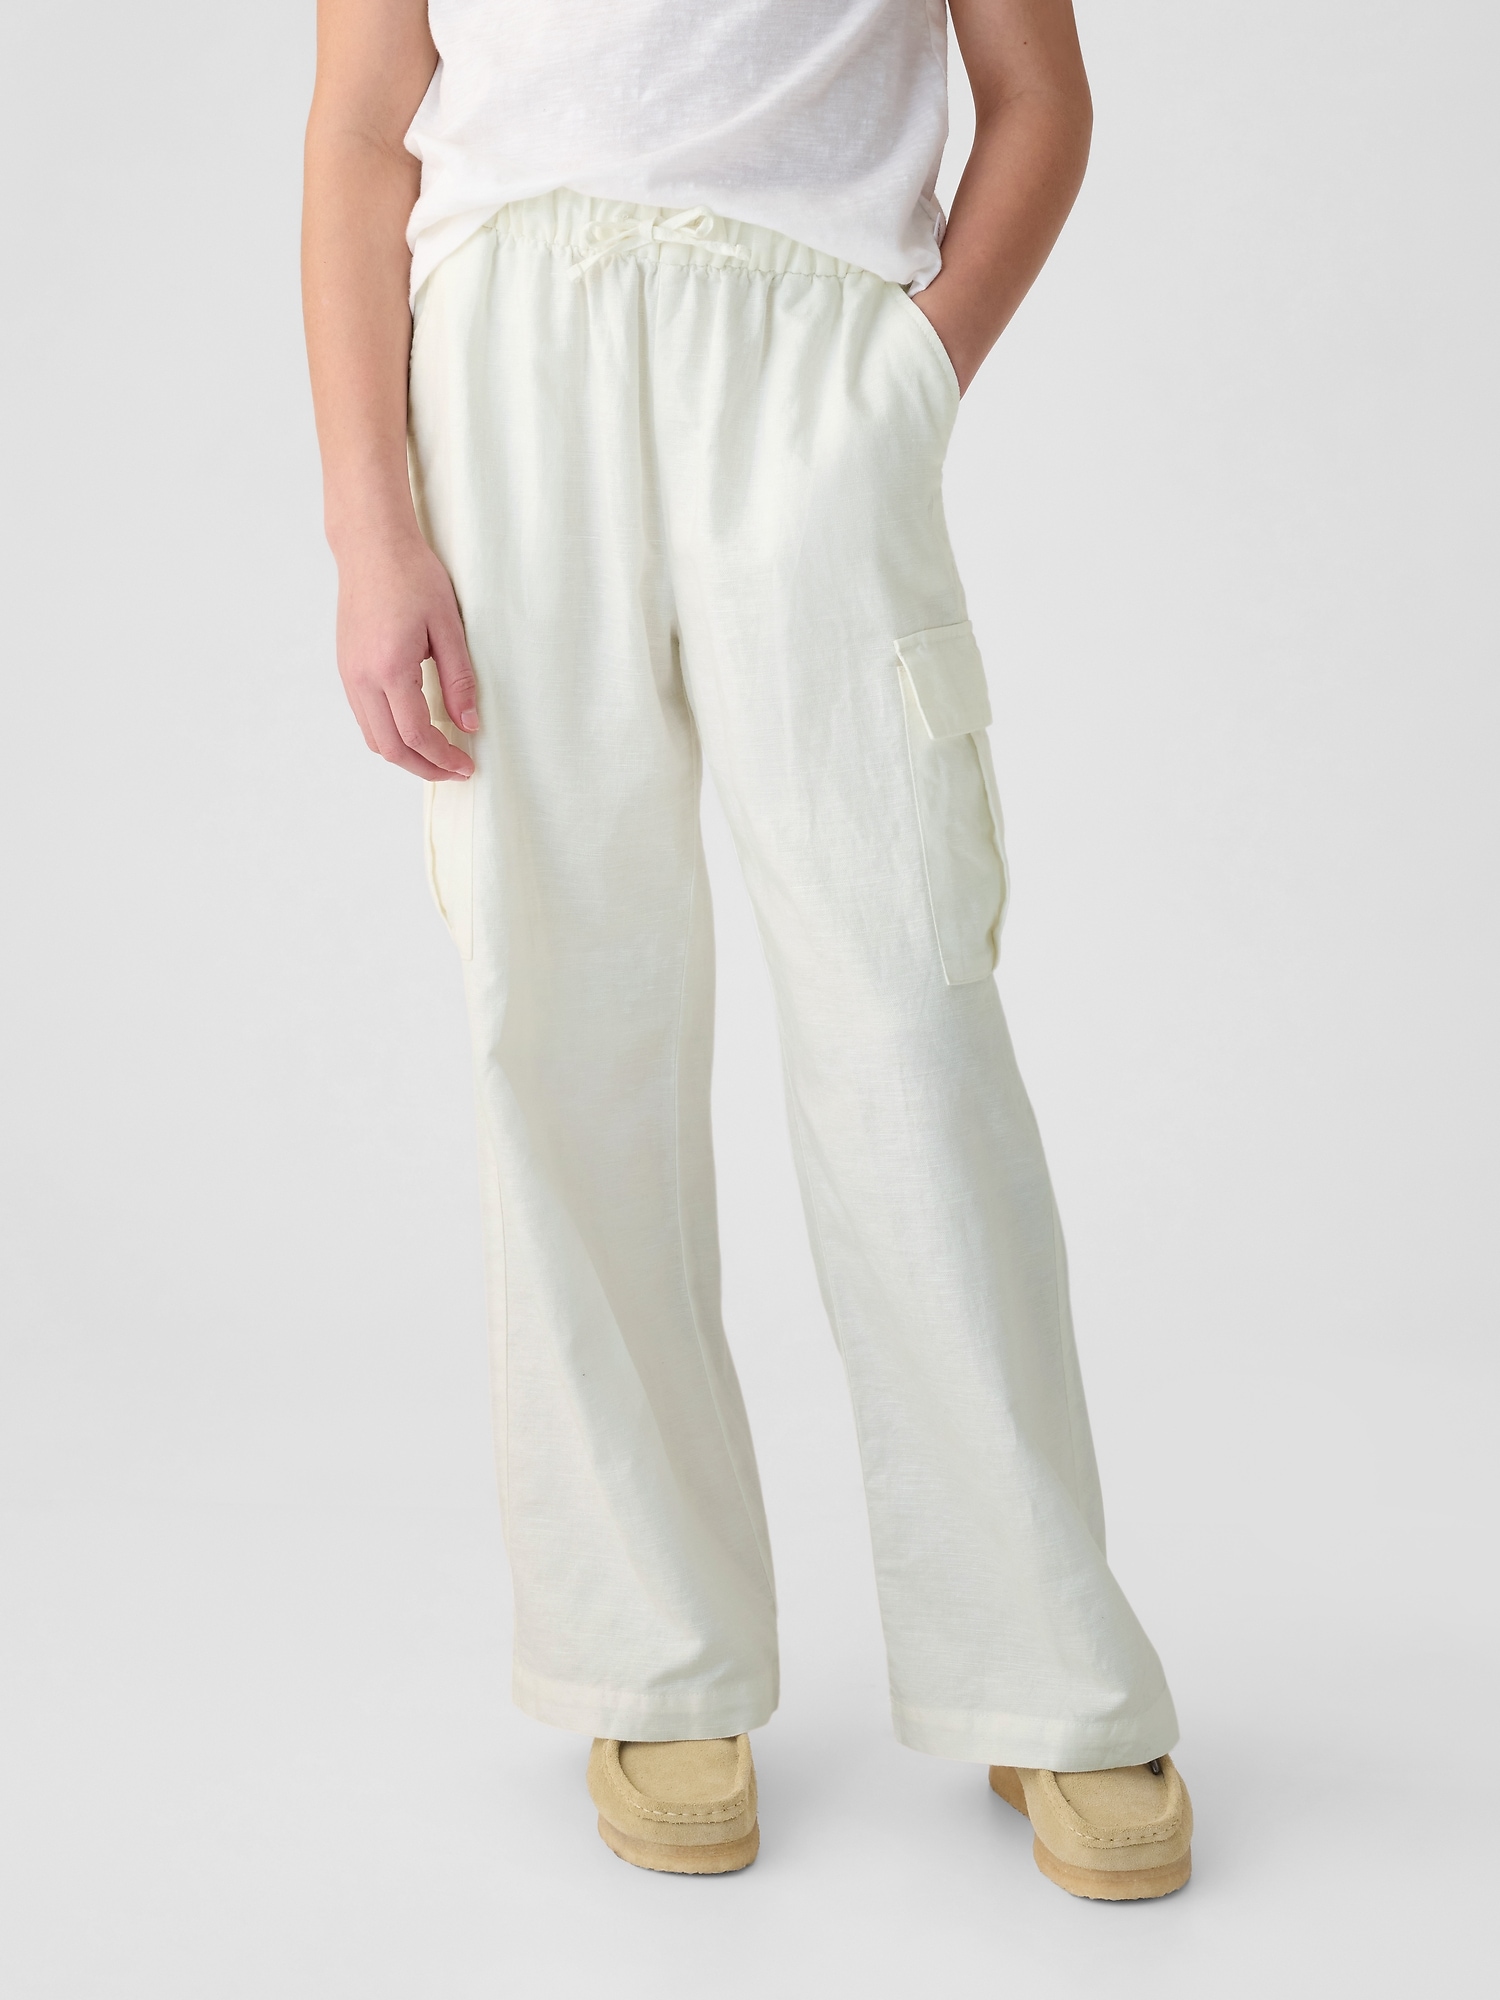 Buy Ukal Women Regular Fit White Cotton Blend Pajama Trousers Lounge Pants  Sleepwear Bottoms at Amazon.in